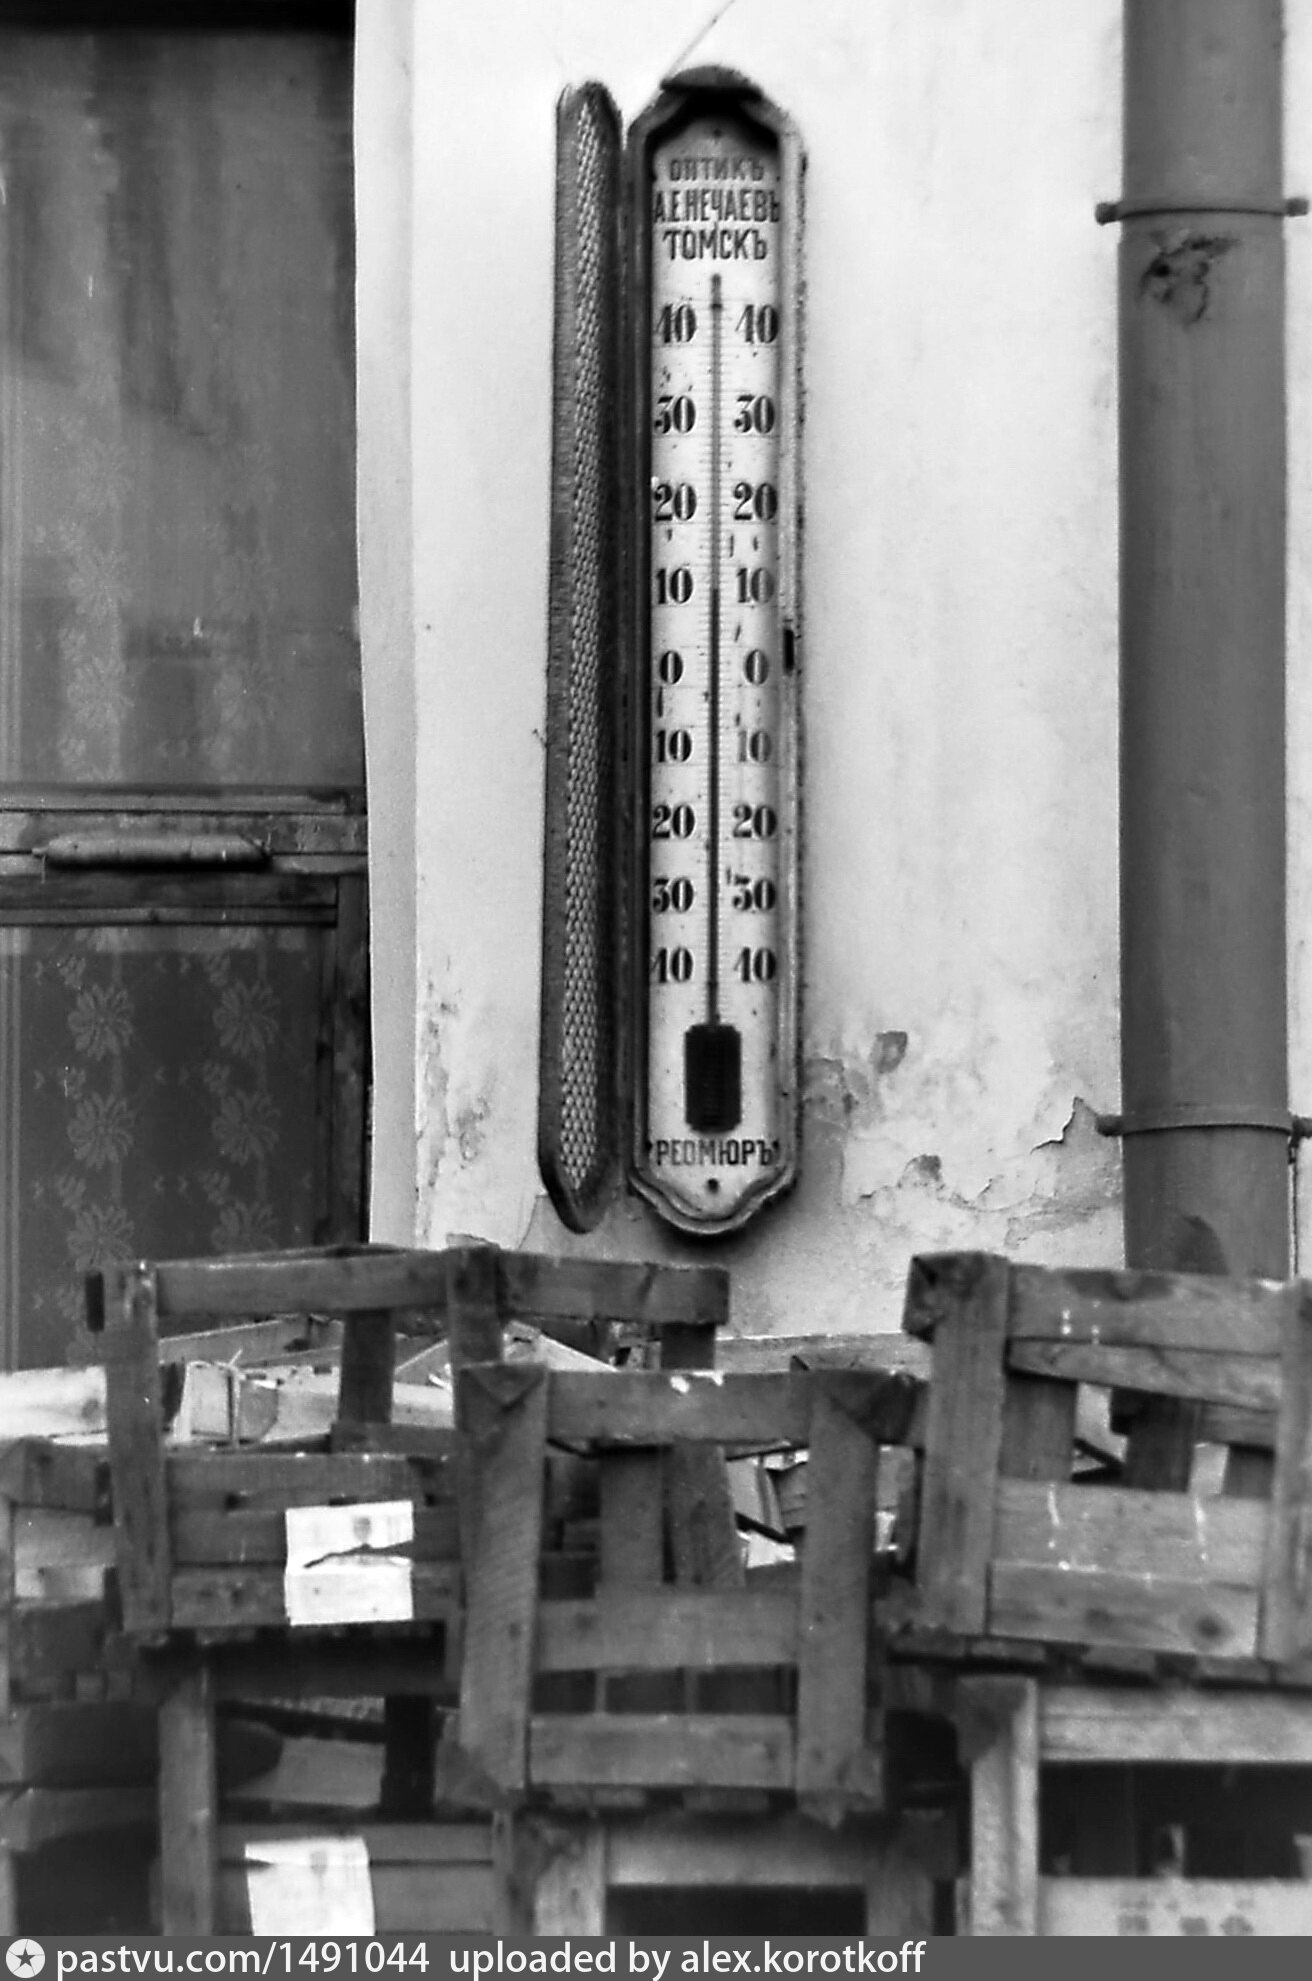  уличный термометр Реомюра (дореволюционный)